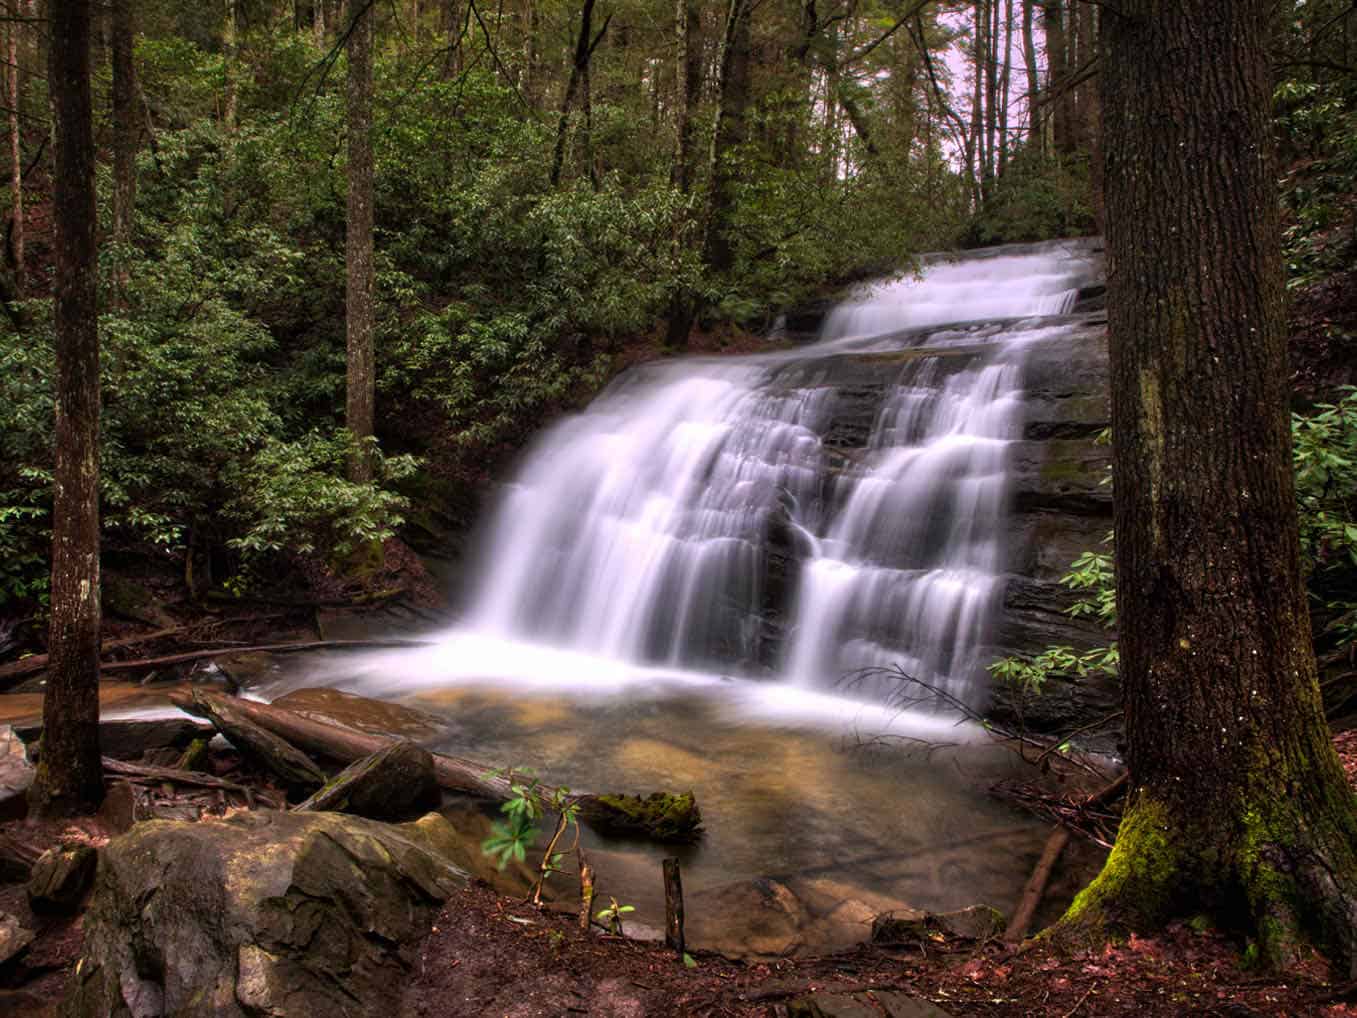 The wide Long Creek Falls tumbles down a heavily forested hillside near Blue Ridge, GA.